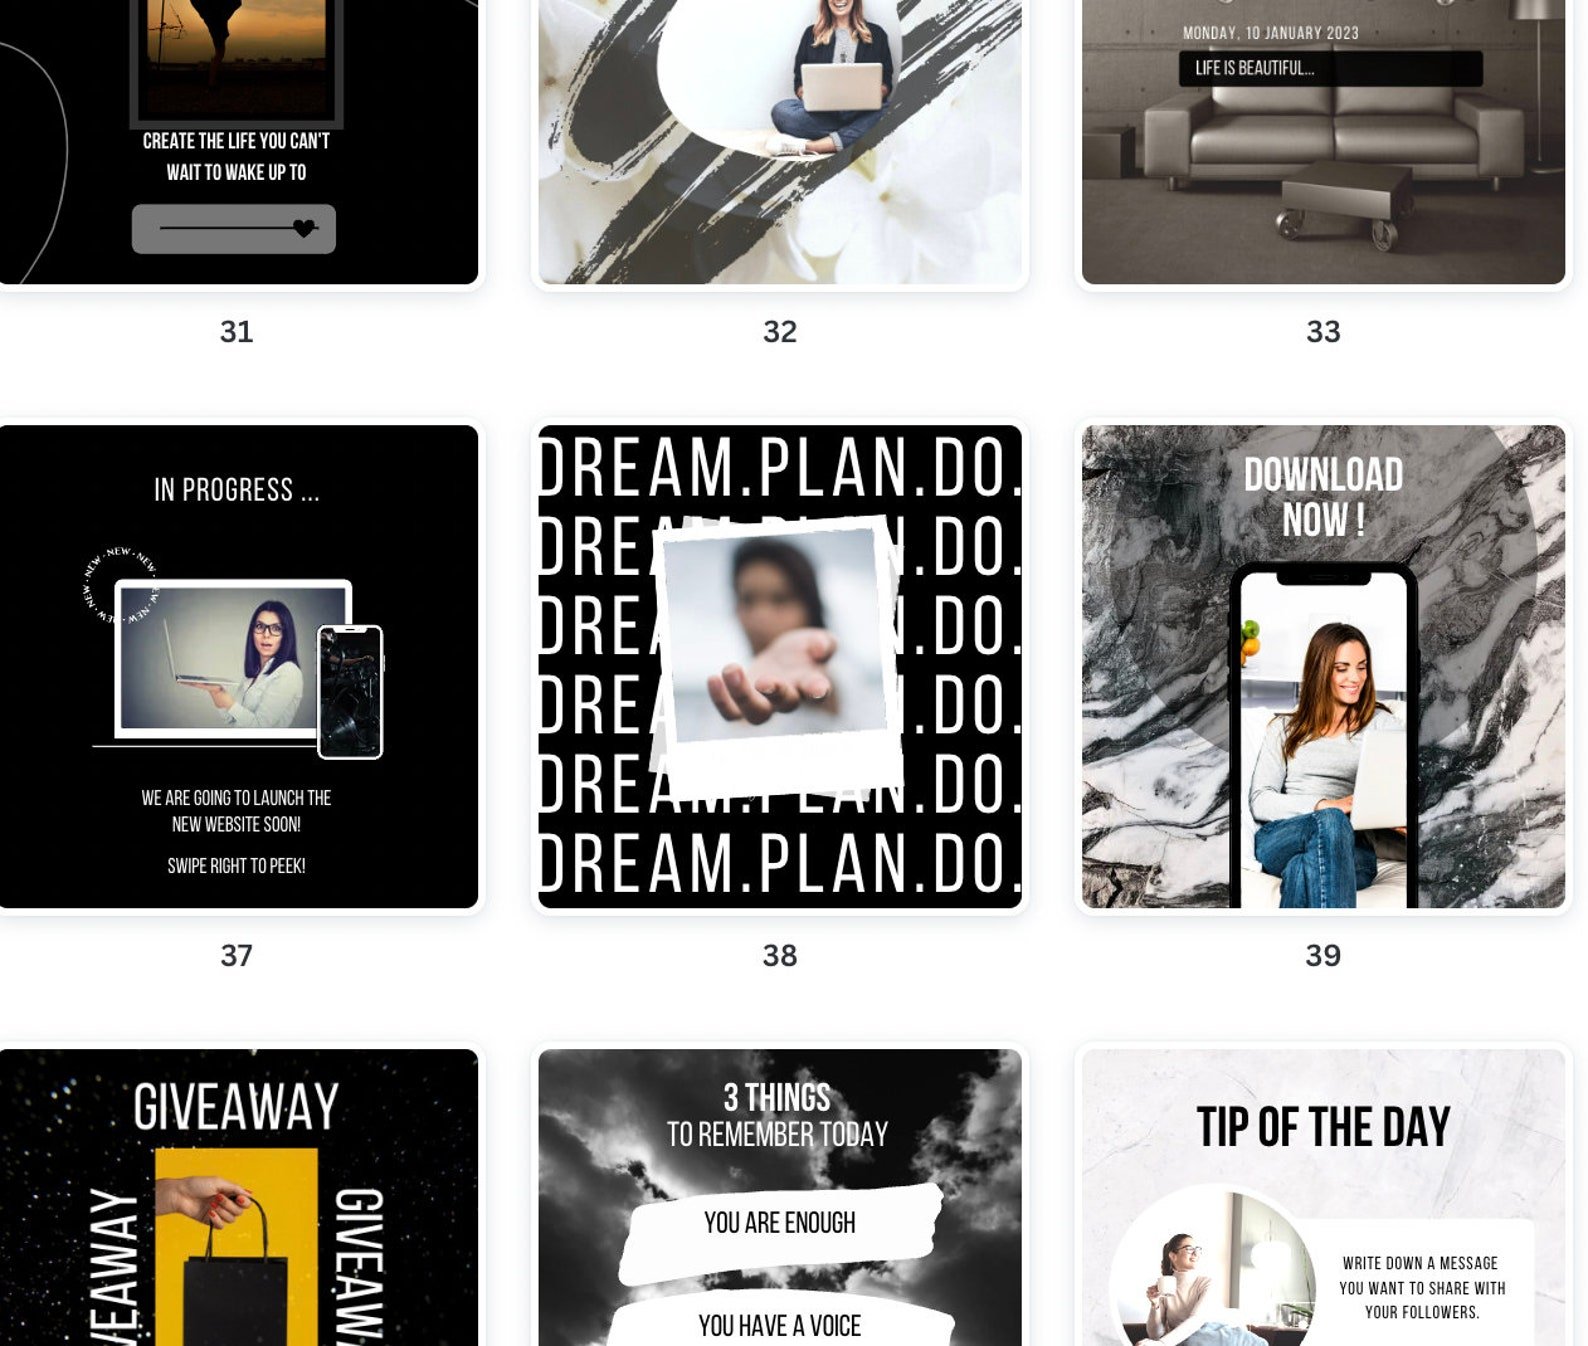 Canva Luxury Social Media Templates | Instagram | Pinterest | Black and white modern templates | Fully editable | 50 templates